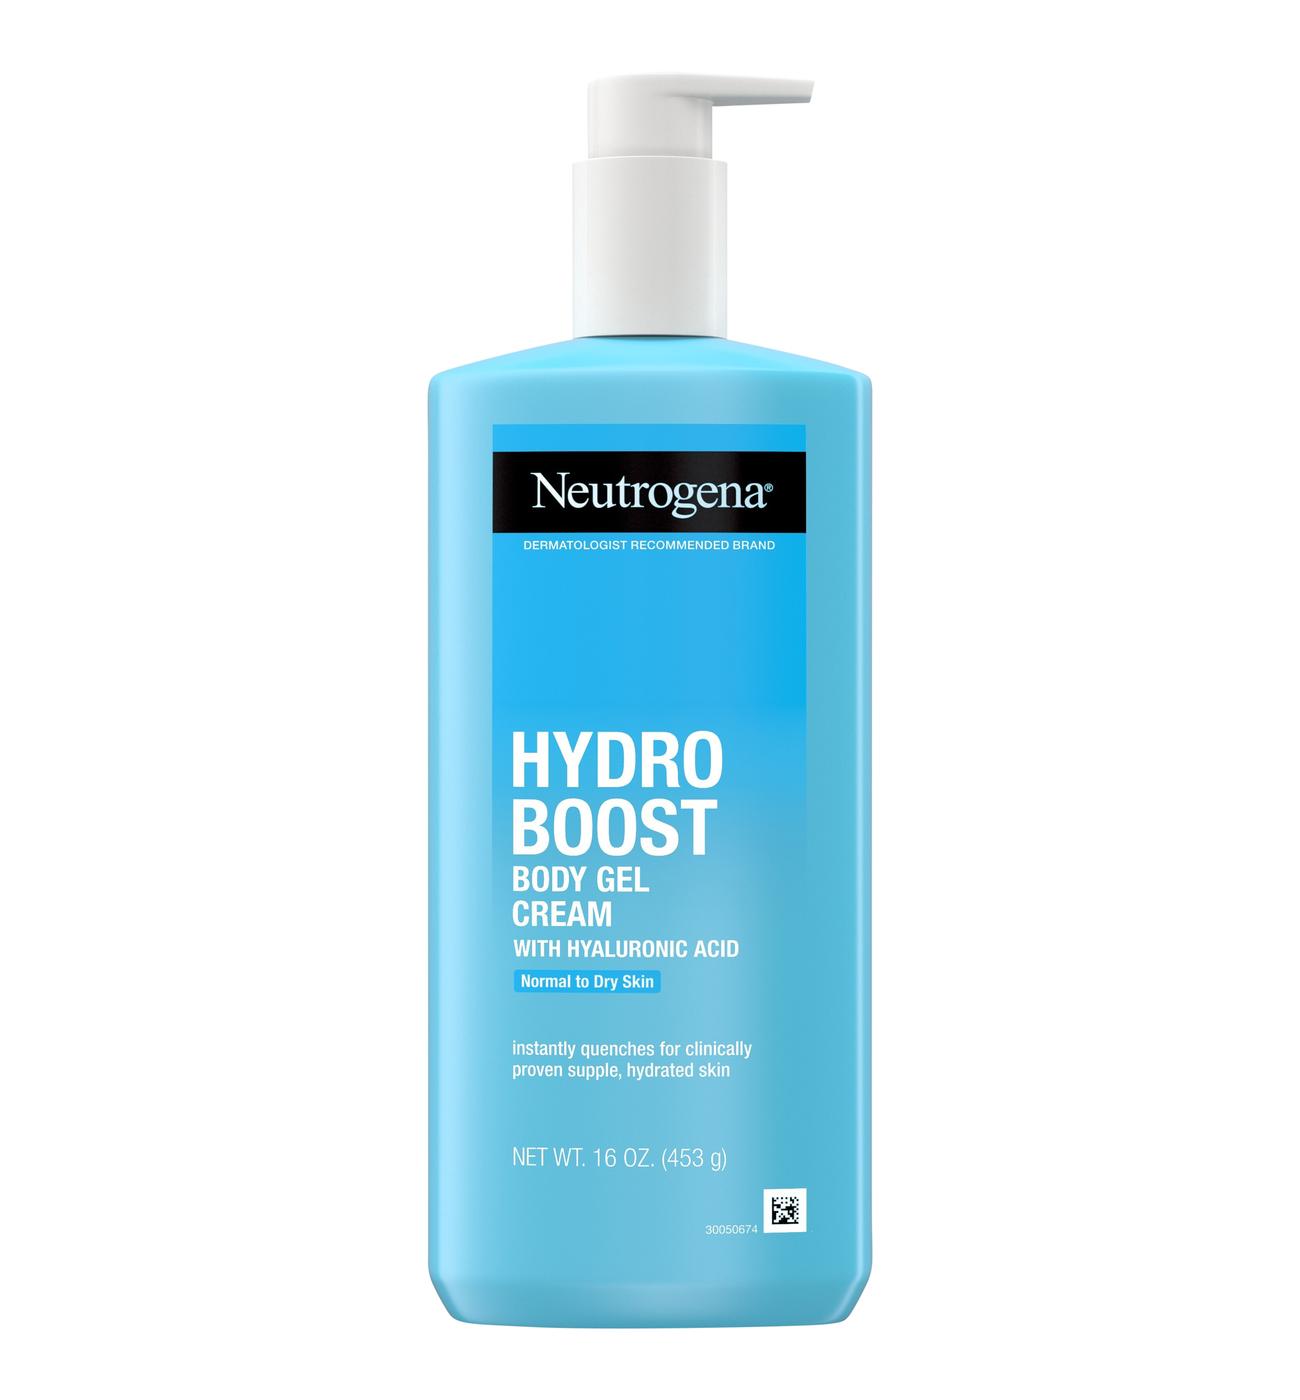 Neutrogena Hydro Boost Body Gel Cream; image 1 of 5